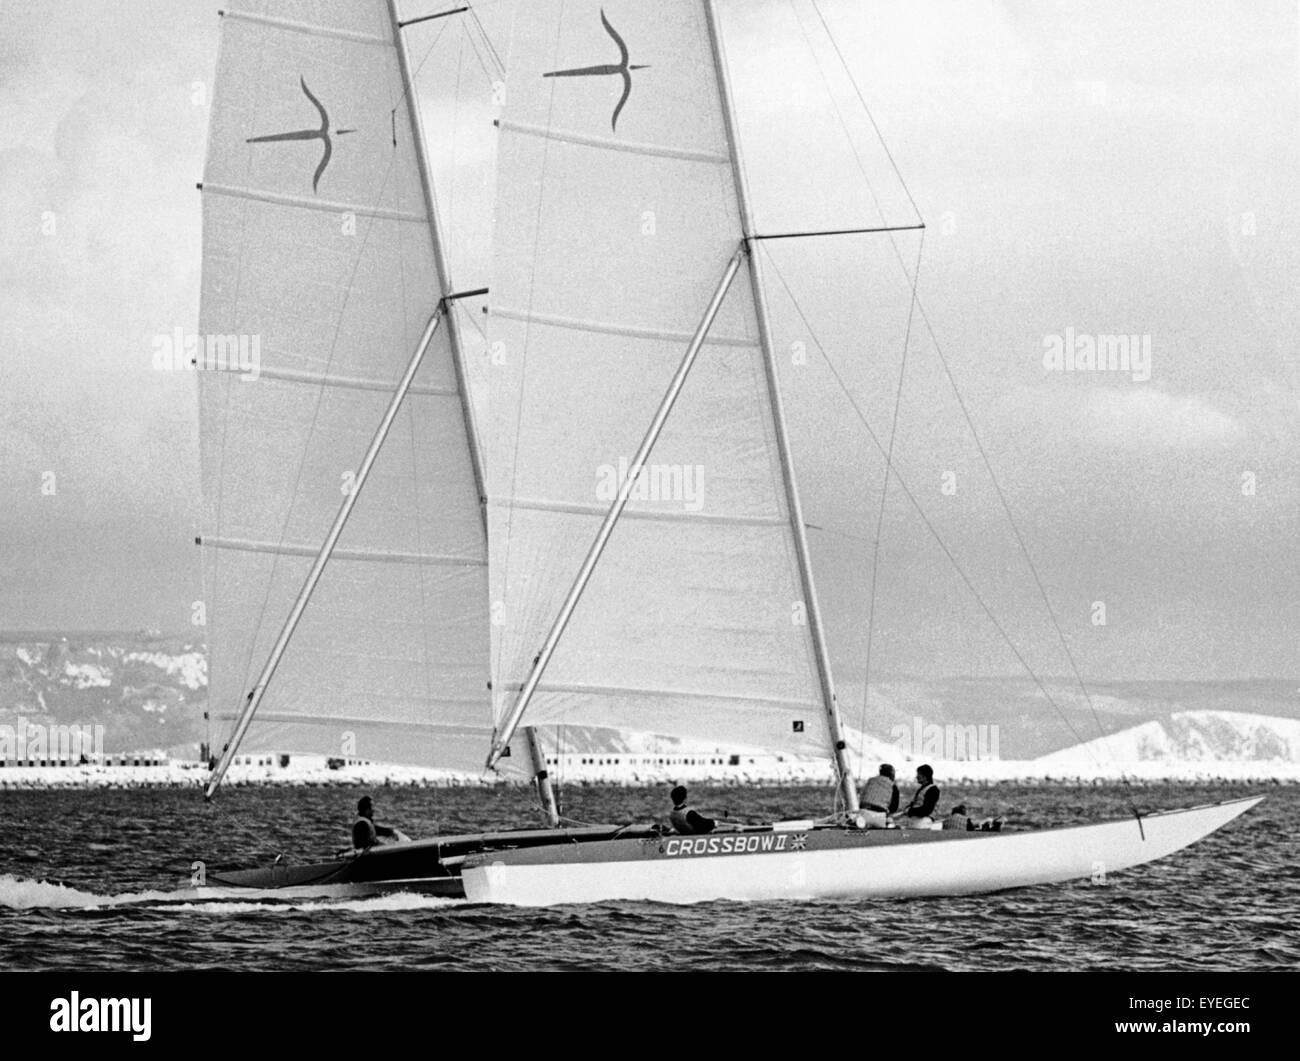 AJAXNETPHOTO. - 29 Oct, 1976. PORTLAND, Inglaterra. - Velocidad de Weymouth semana - Catamarán CROSSBOW II EN VELOCIDAD EN PORTLAND Harbour. Foto:Jonathan EASTLAND/AJAX REF:3 WEY 76 Foto de stock